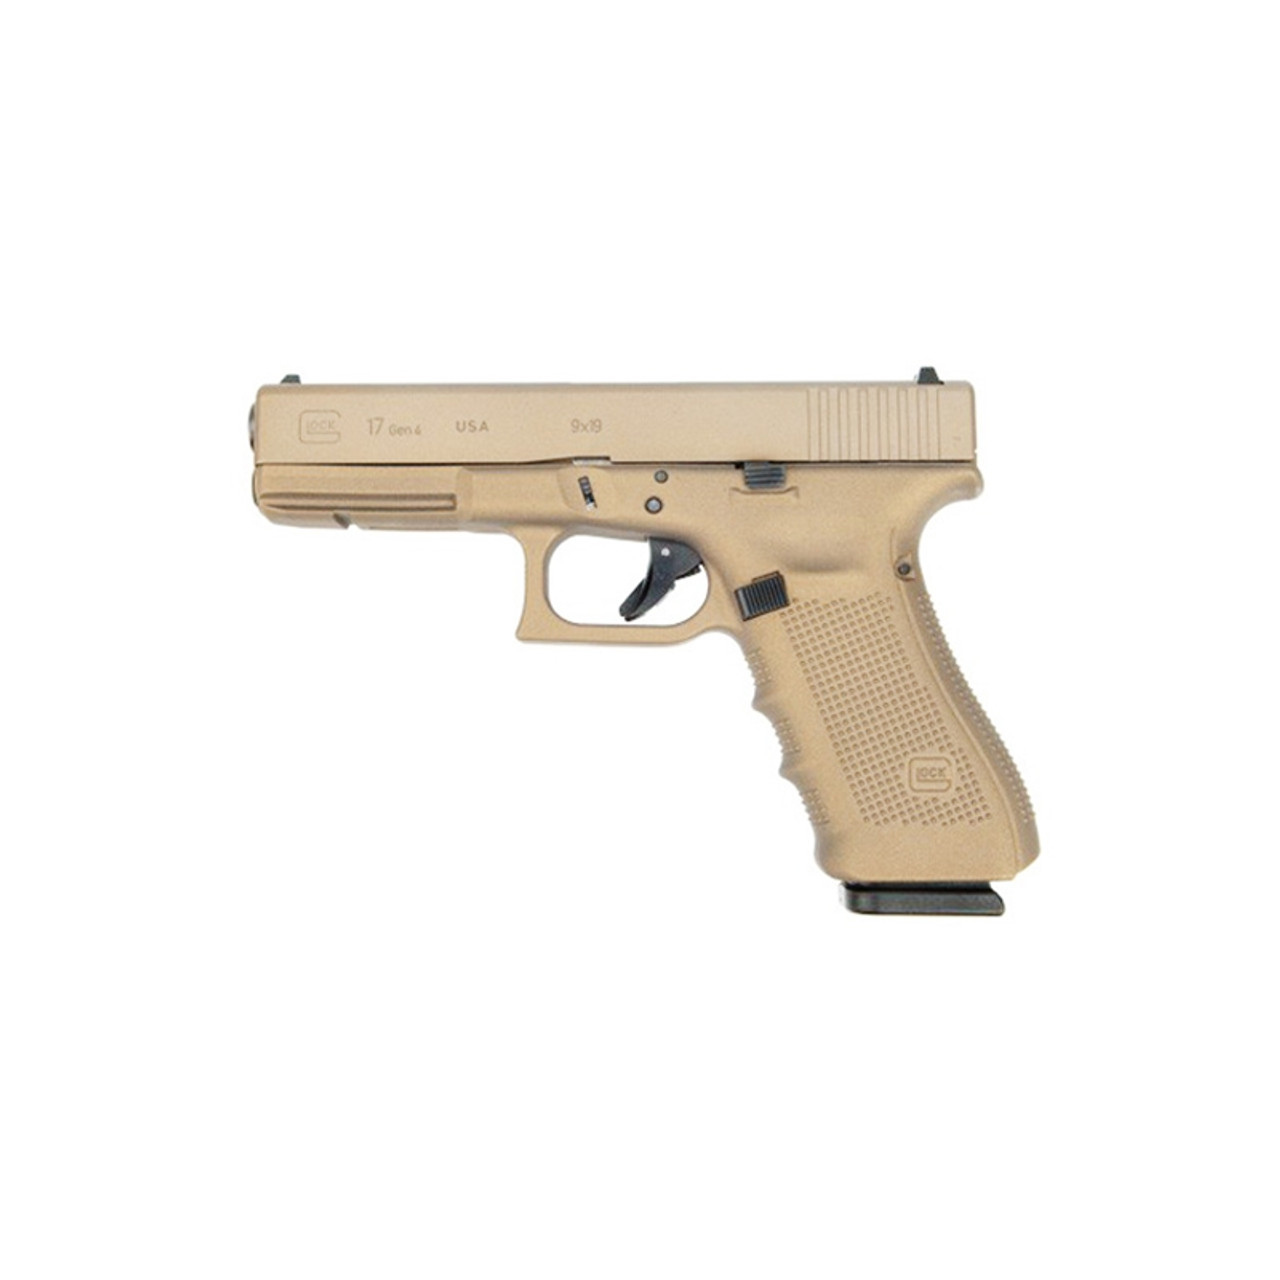 Glock G17 G4 9mm Luger in Desert Tan - 4.48 Barrel - Centerfire